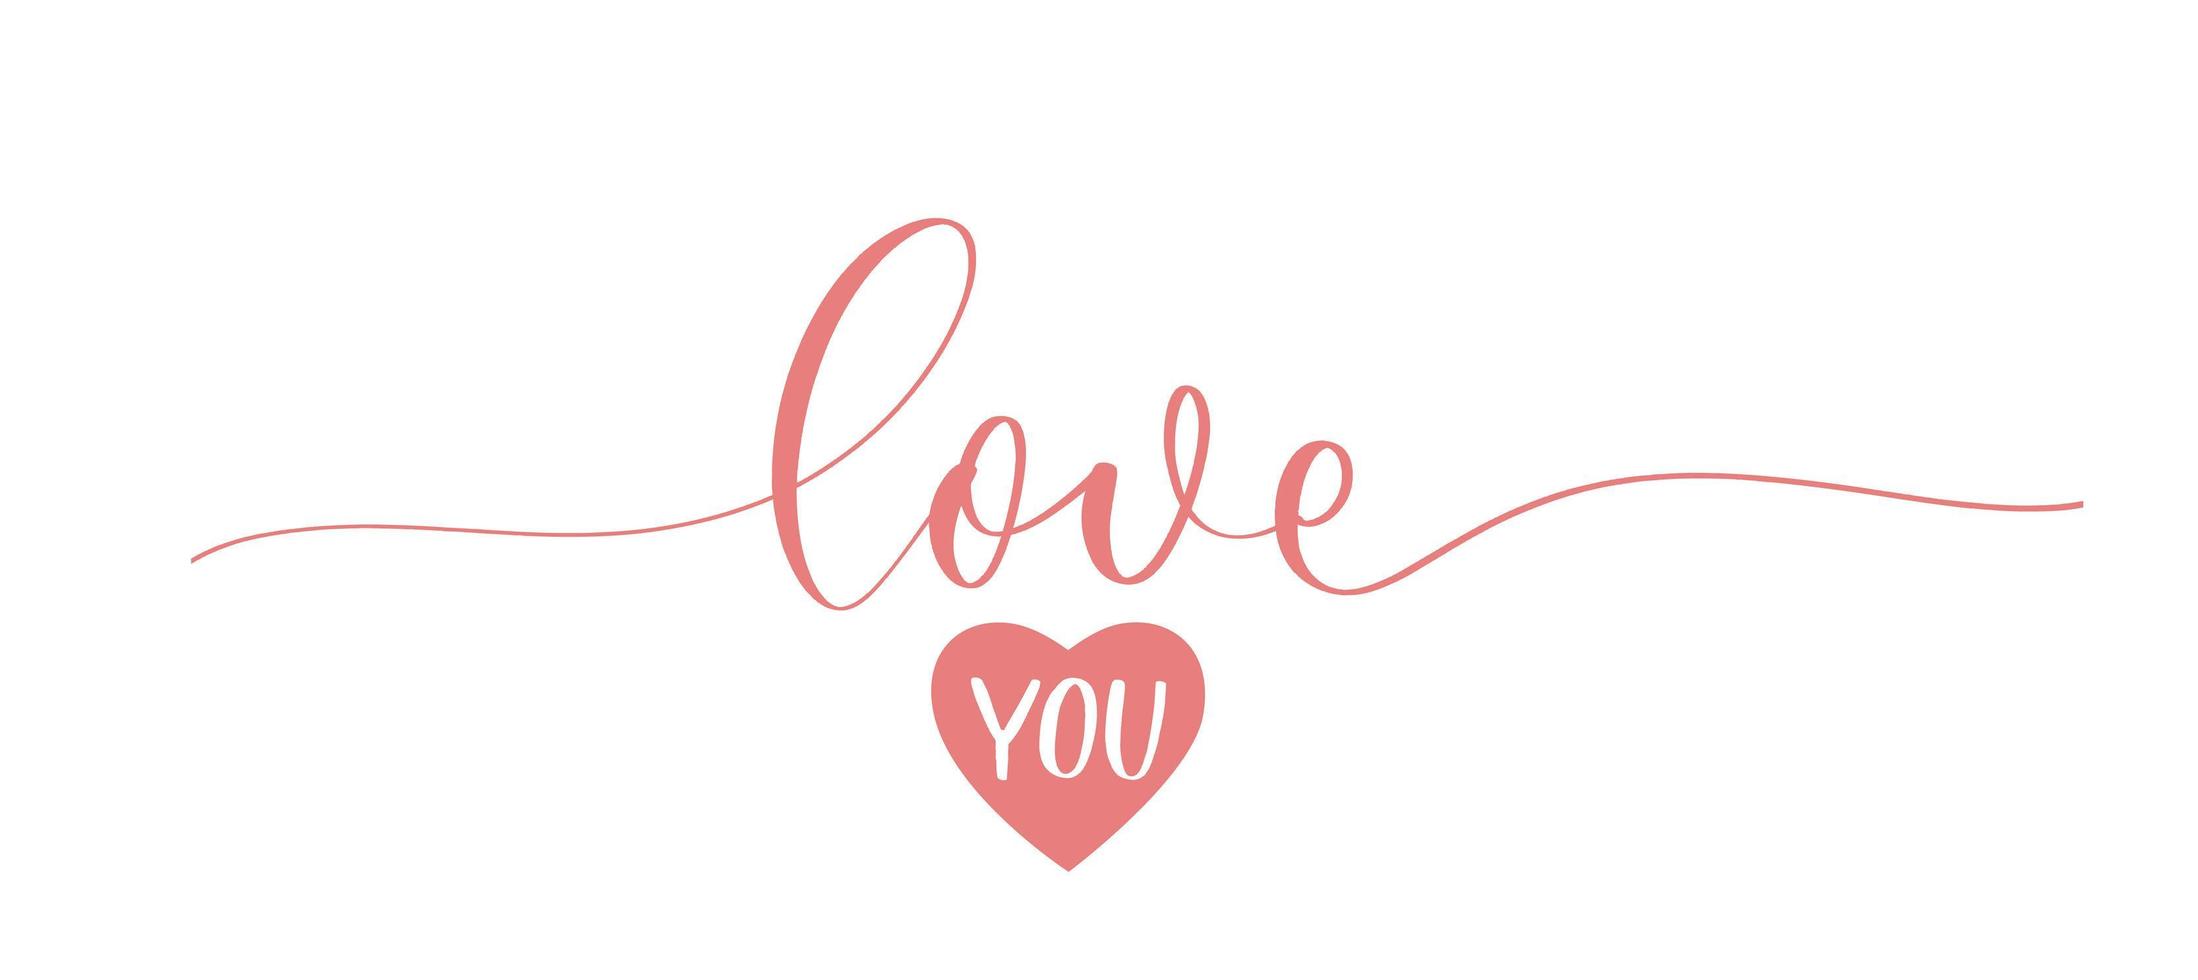 Love you. Calligraphy inscription - invitation valentine's day card. vector